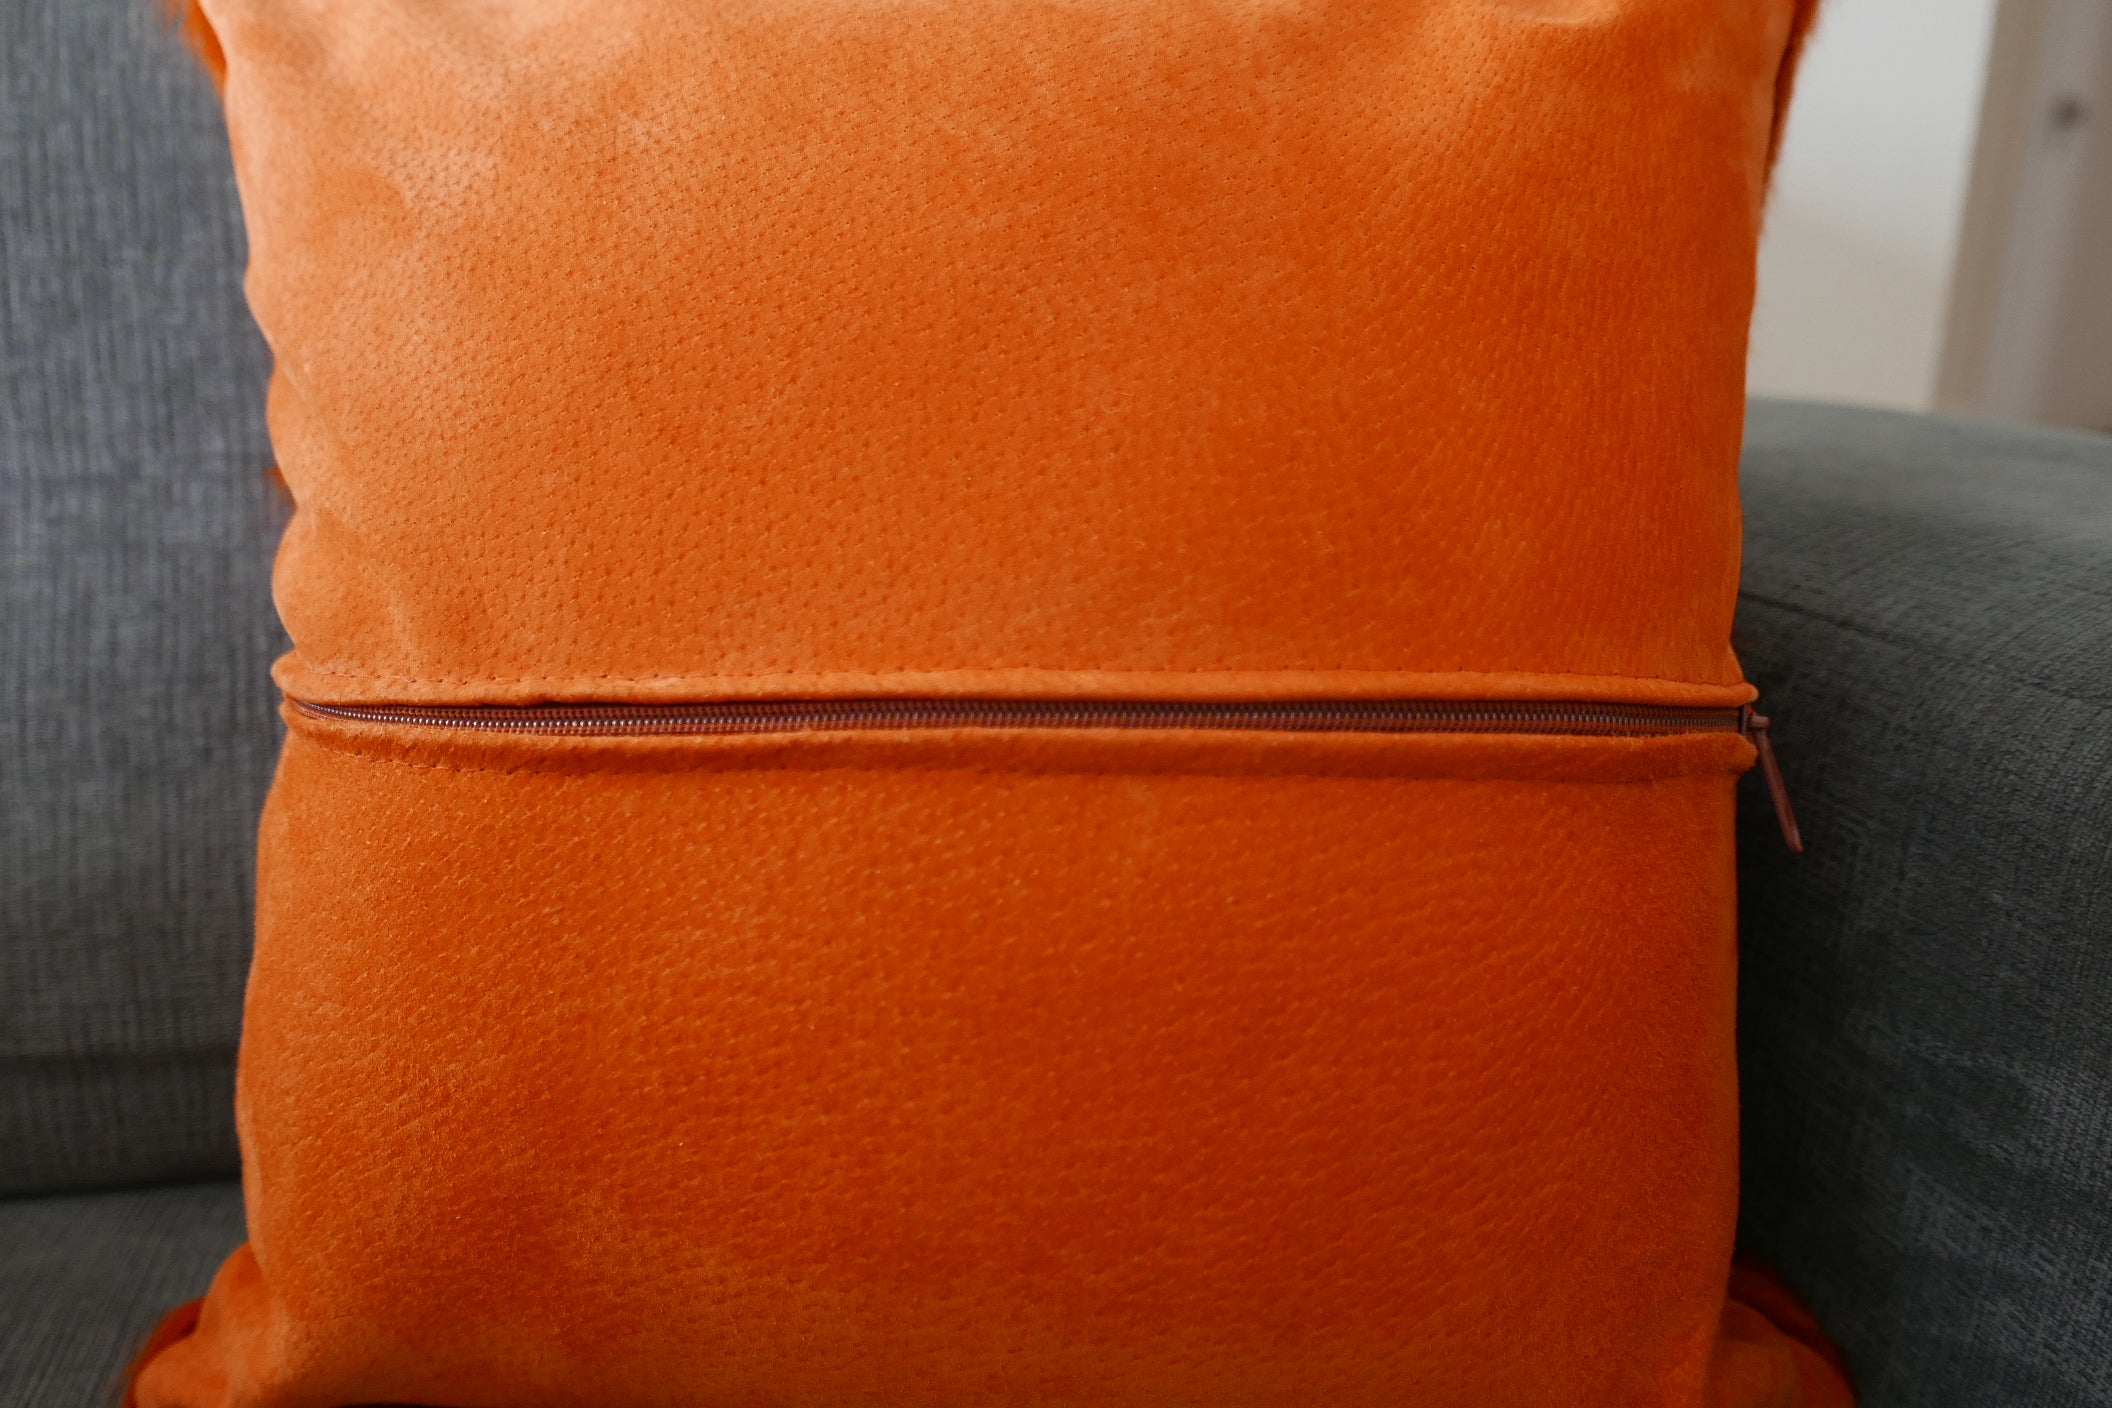 Burnt Orange Springbok Pillow Cover - Size: 15x15" (similar to cow hide skin pillow)